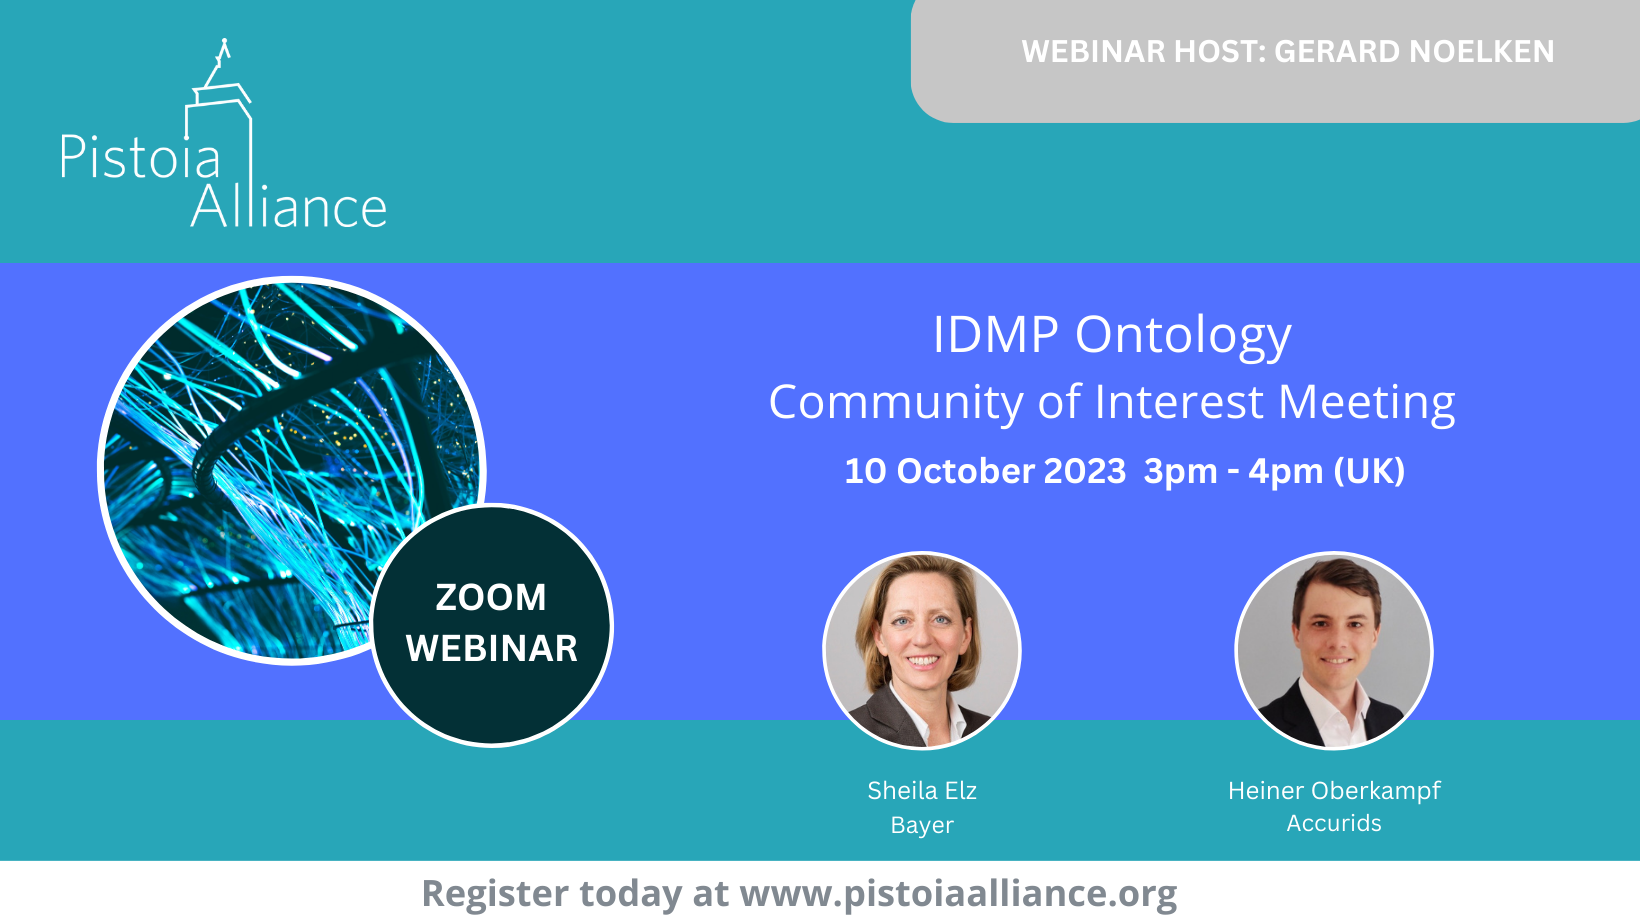 Pistoia Alliance's IDMP Ontology Community of Interest Meeting - October